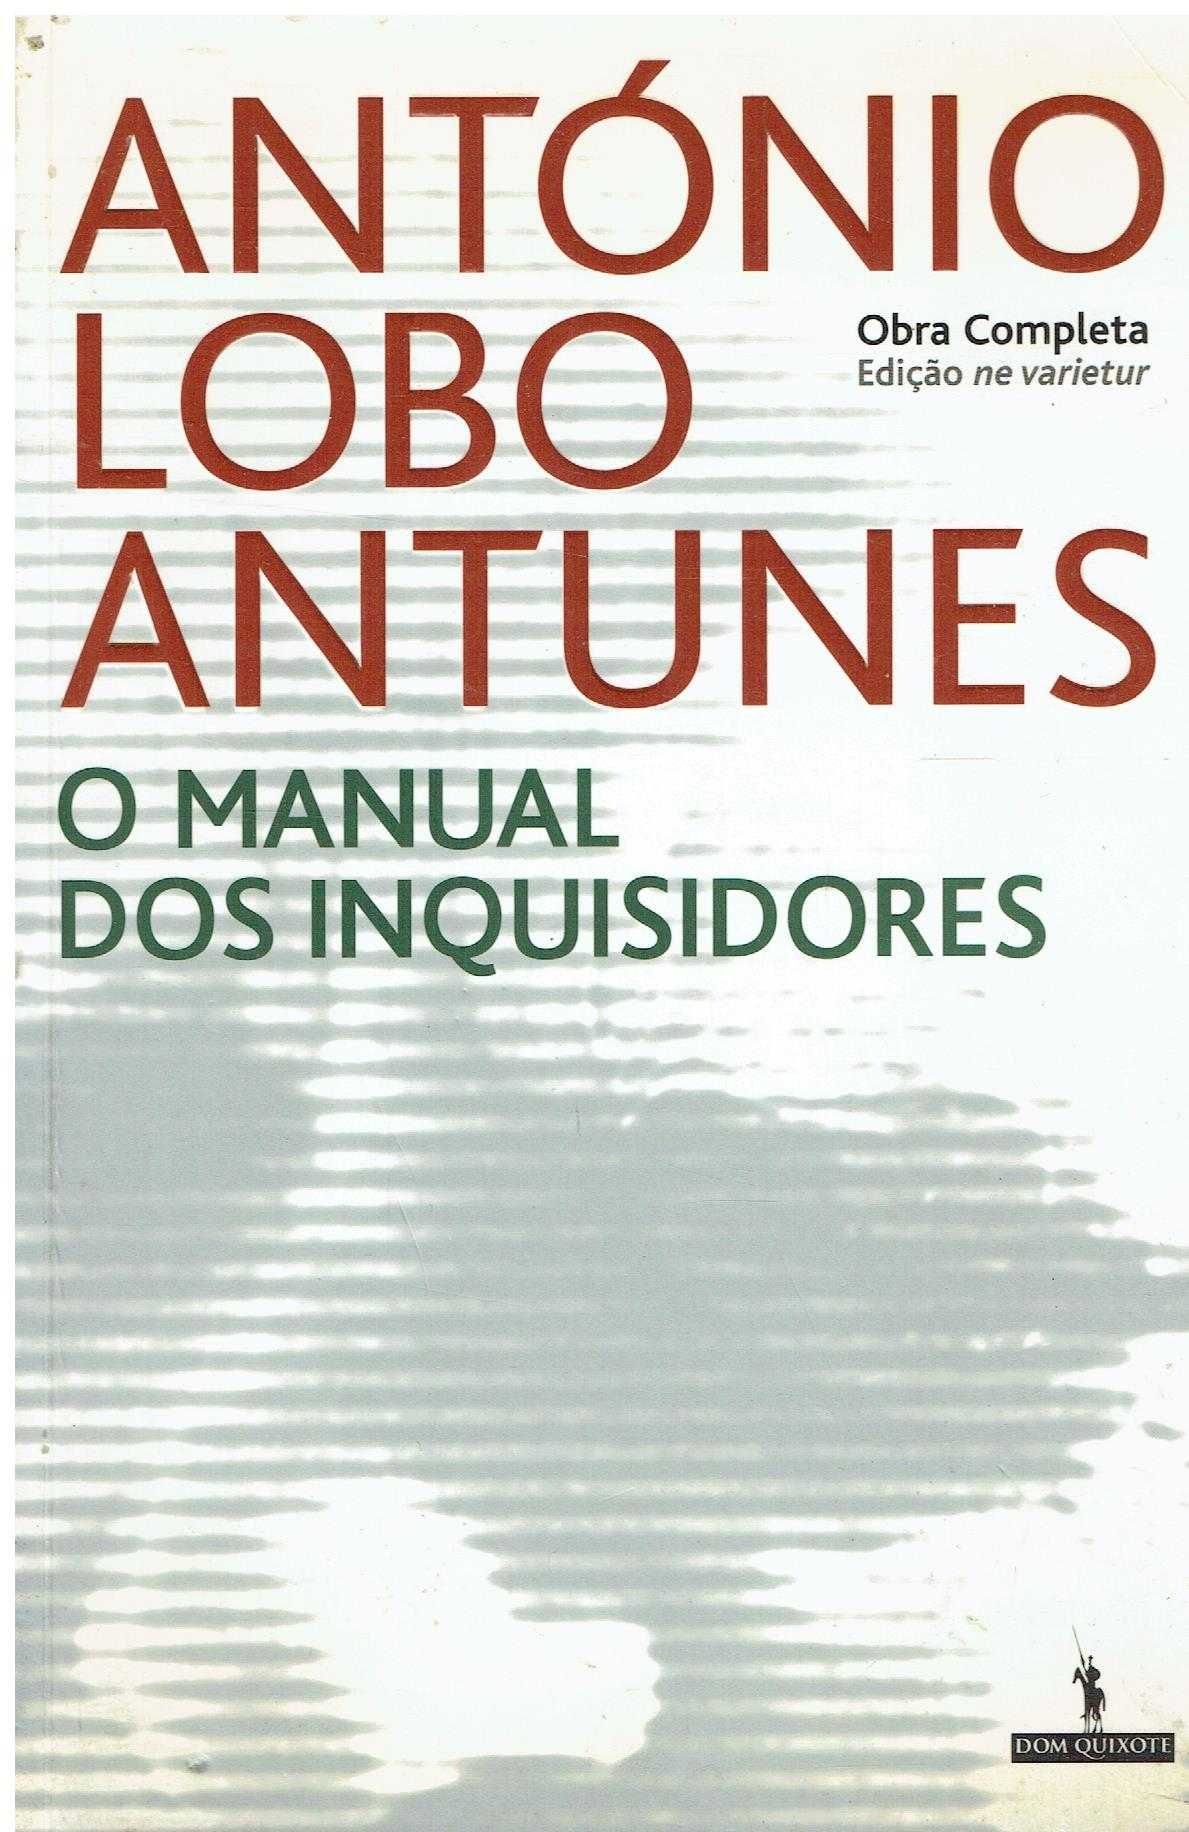 4233

O Manual dos Inquisidores 
de António Lobo Antunes